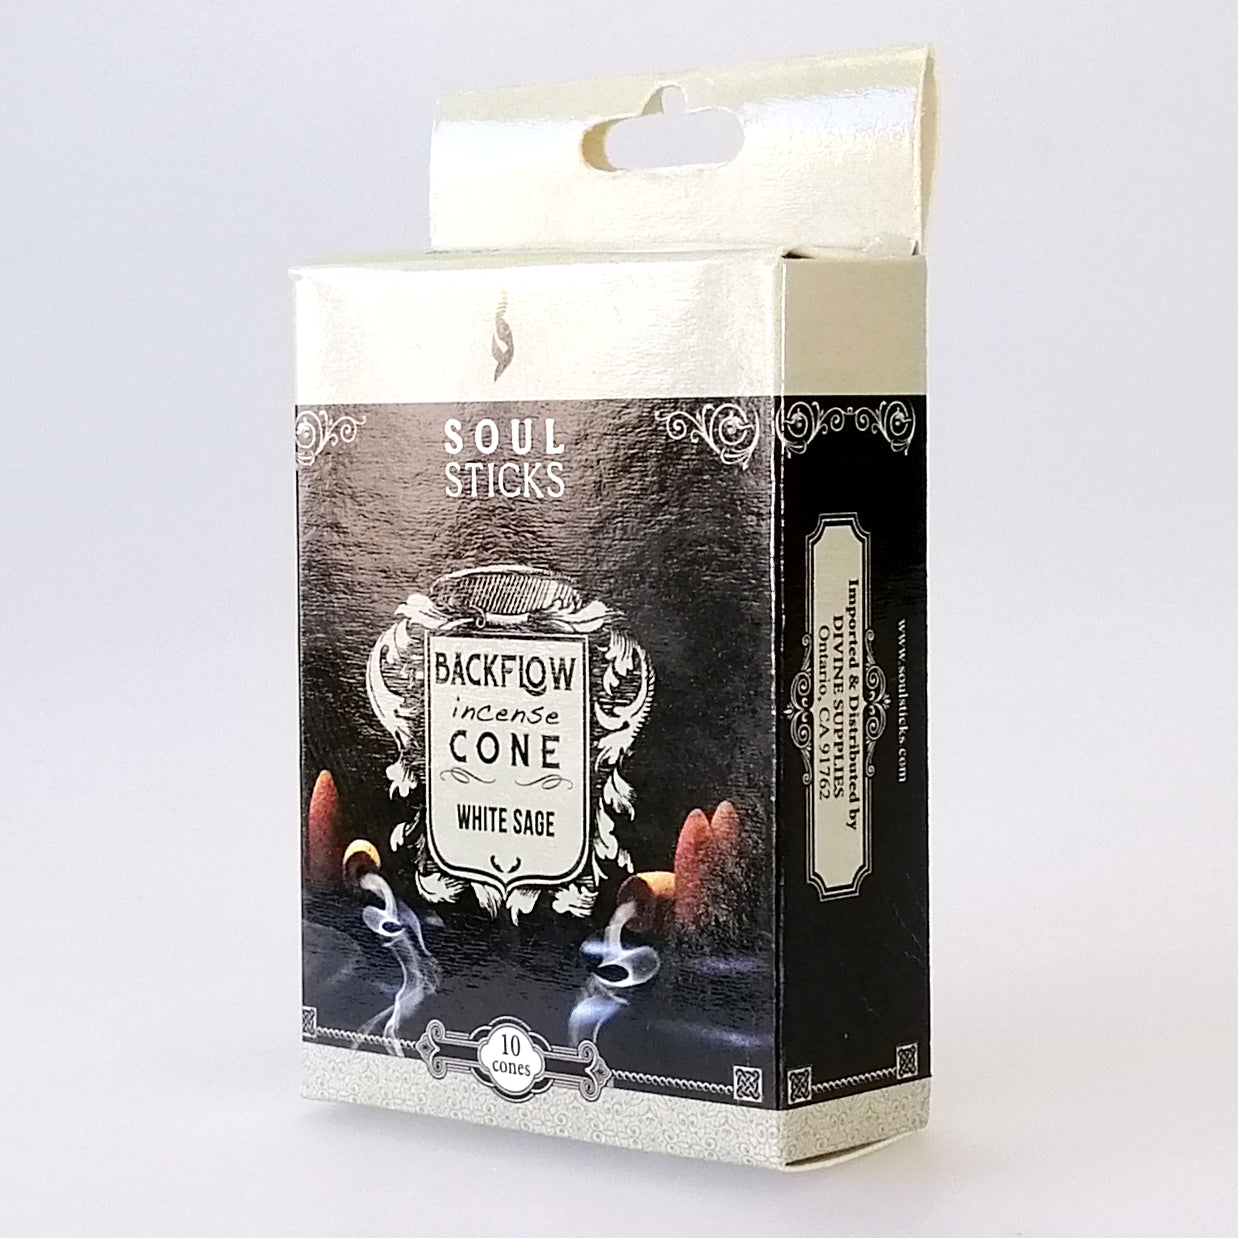 Soul Sticks Backflow Incense Cones - White Sage